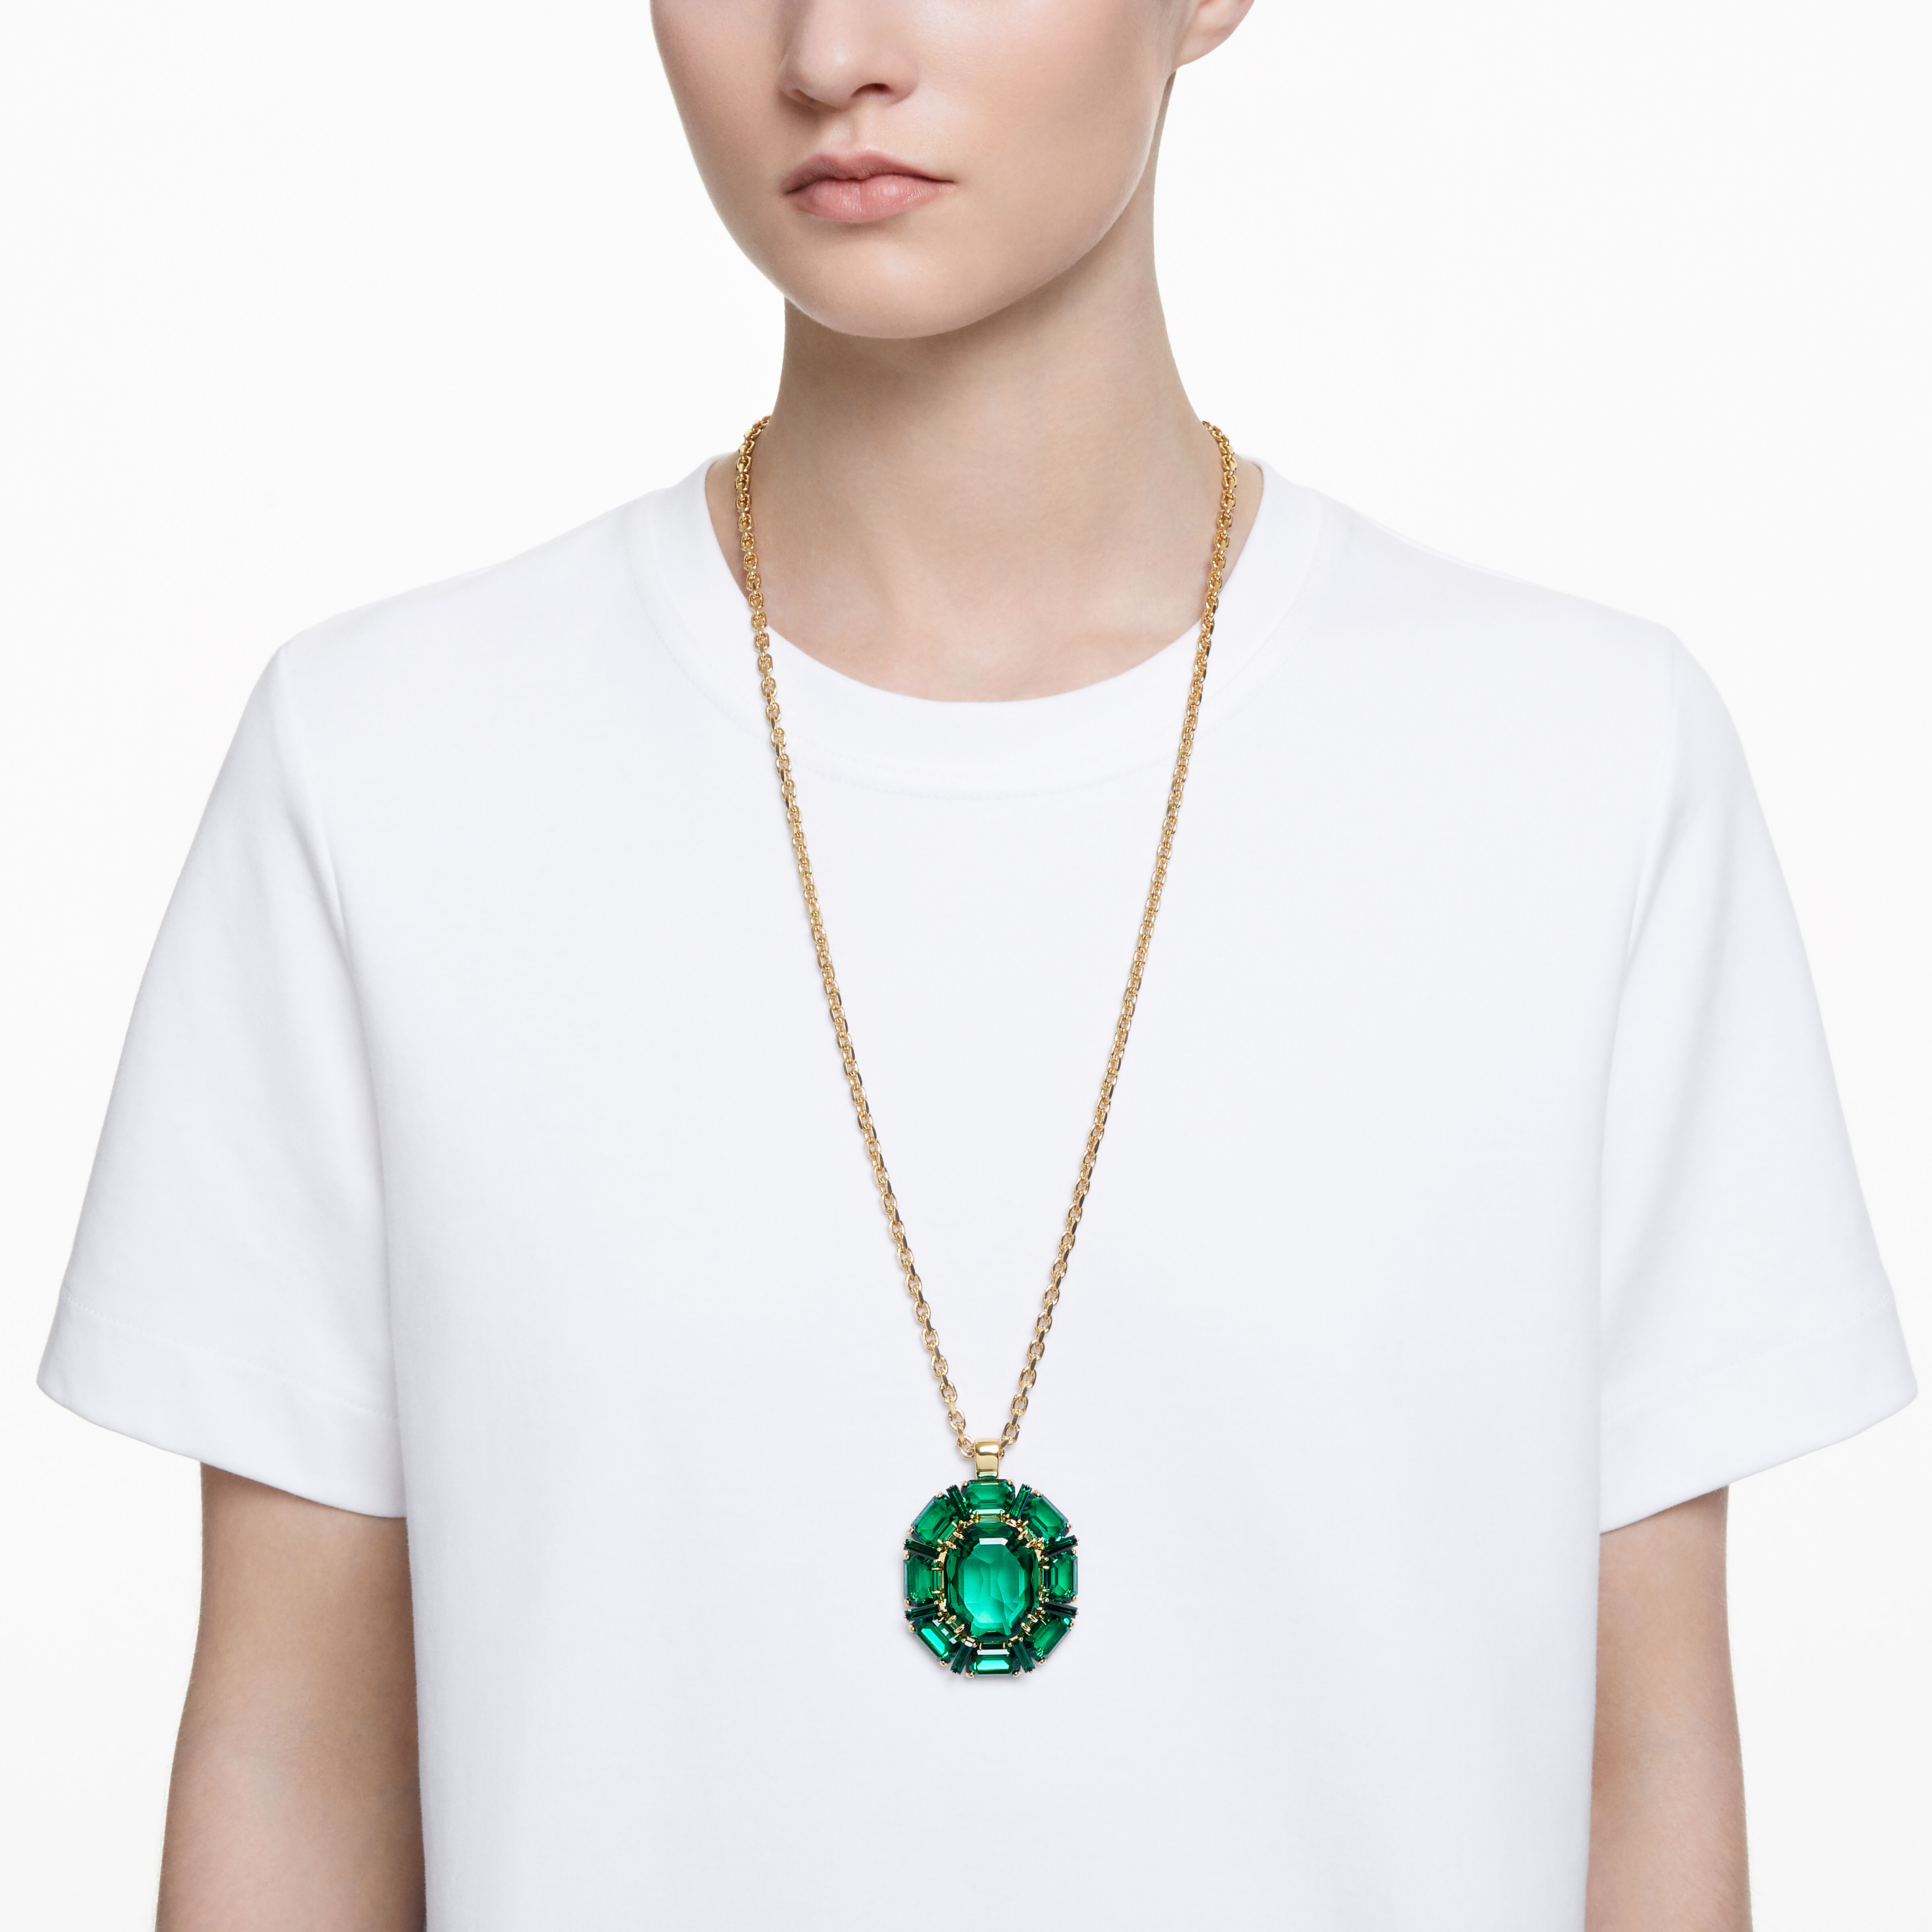 Buy Swarovski Millenia pendant, Mixed cuts, Green, Gold-tone plated